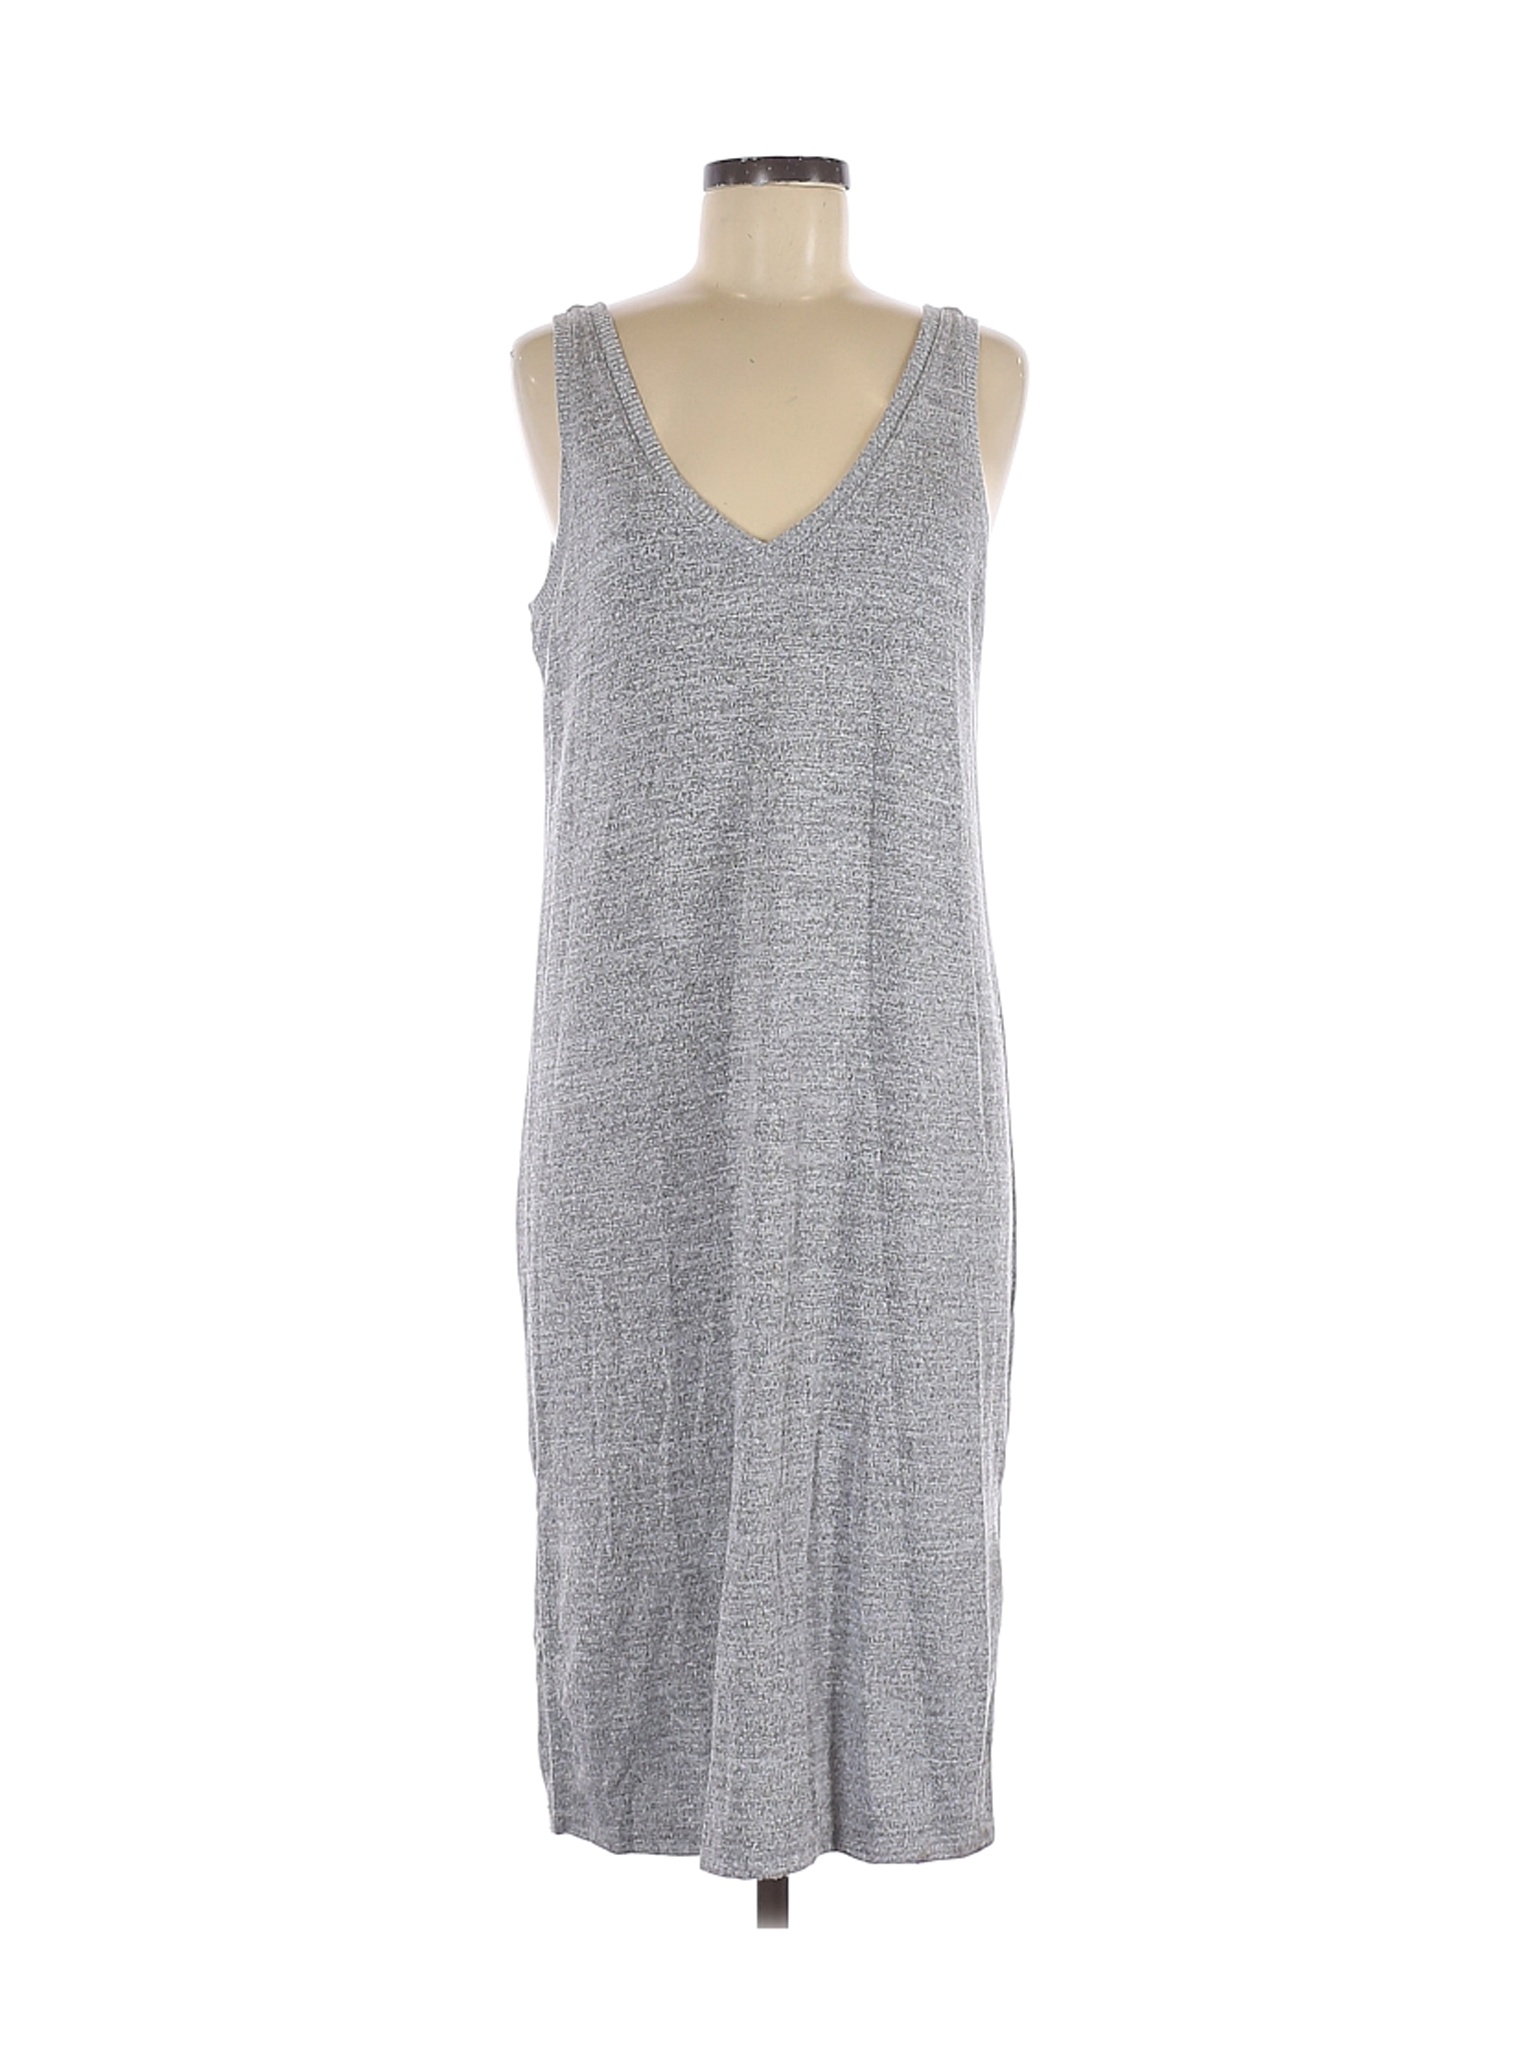 Gap Women Gray Casual Dress M | eBay